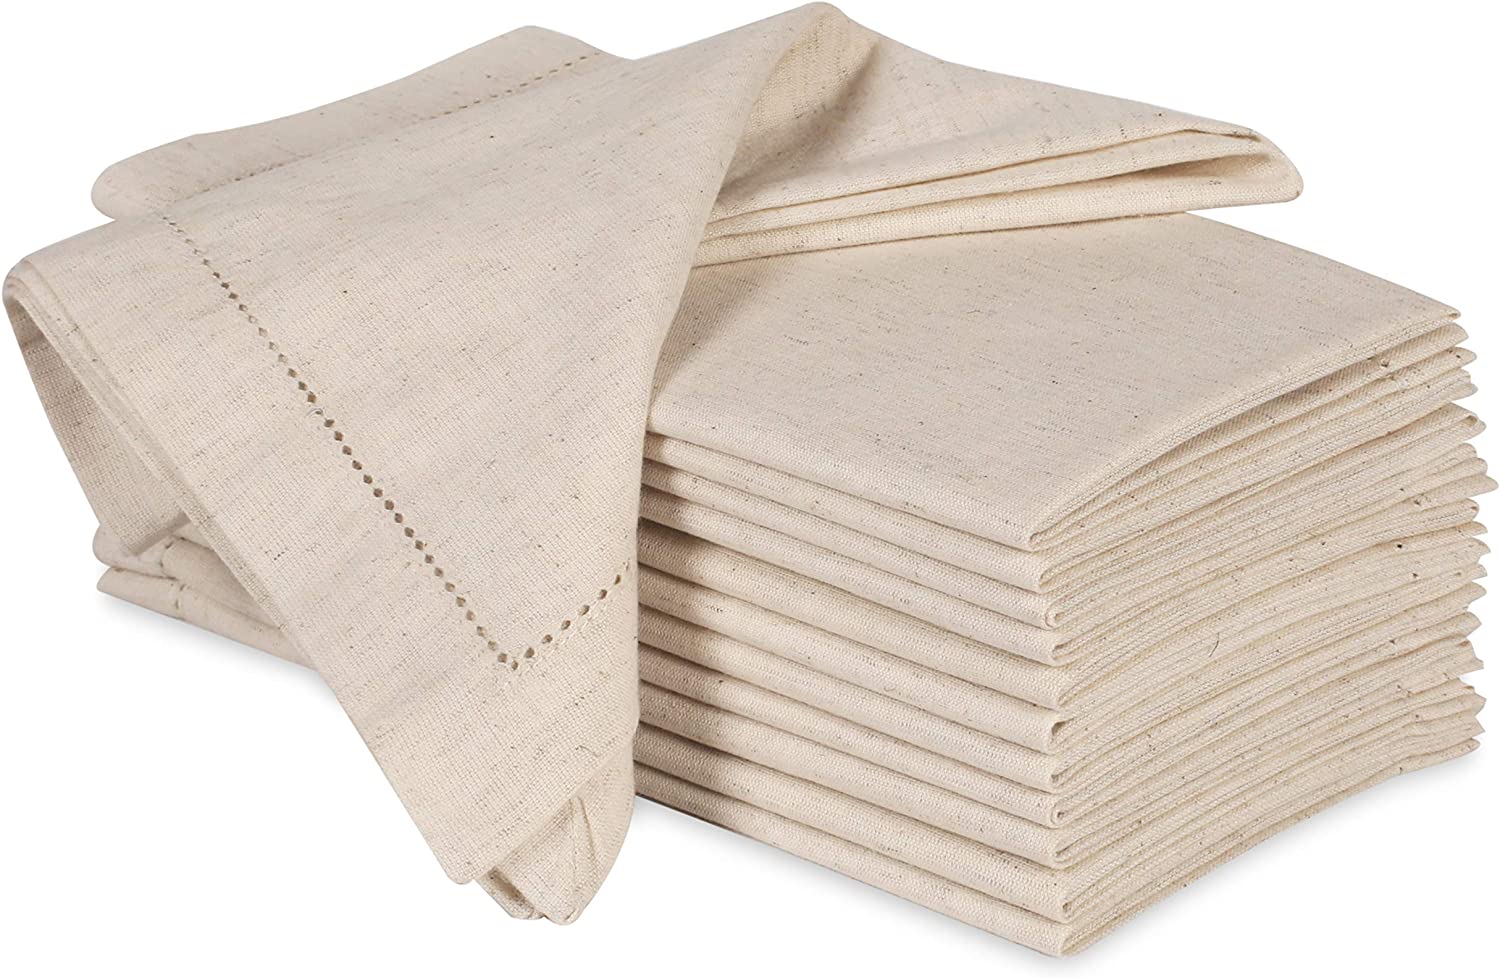 Ruvanti Multi Color Cloth Napkins 12 Pack 18x18 inch Durable Linen Napkins - Soft and Comfortable Reusable Fabric Napkins -Perfect Table NapkinsCotton